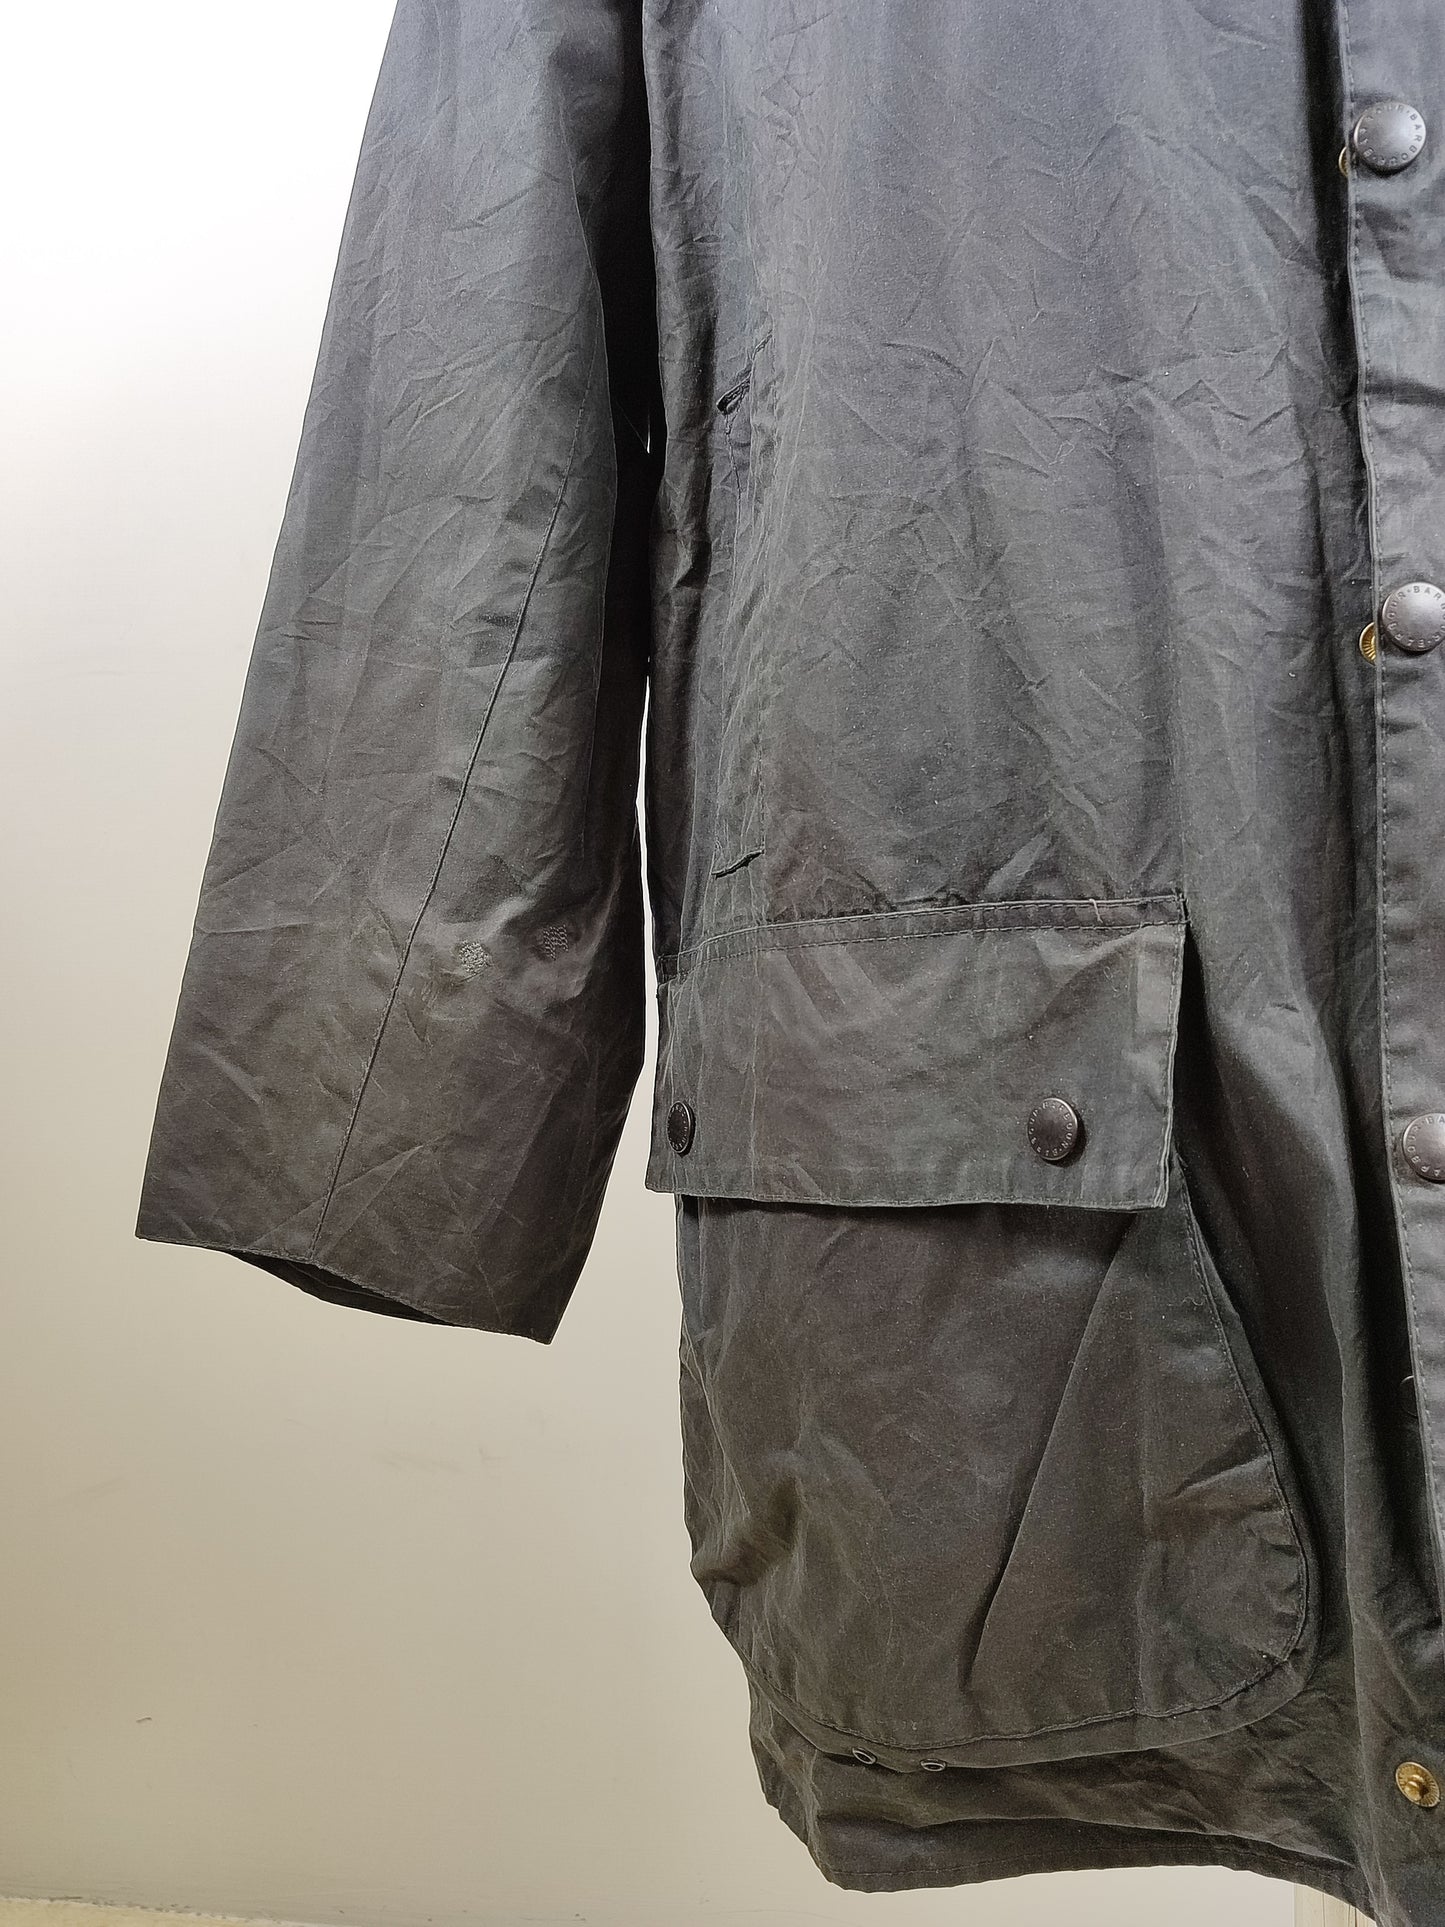 Barbour Border Blu da uomo cotone Cerato C46/117 cm Man Navy Border Coat Size XLarge